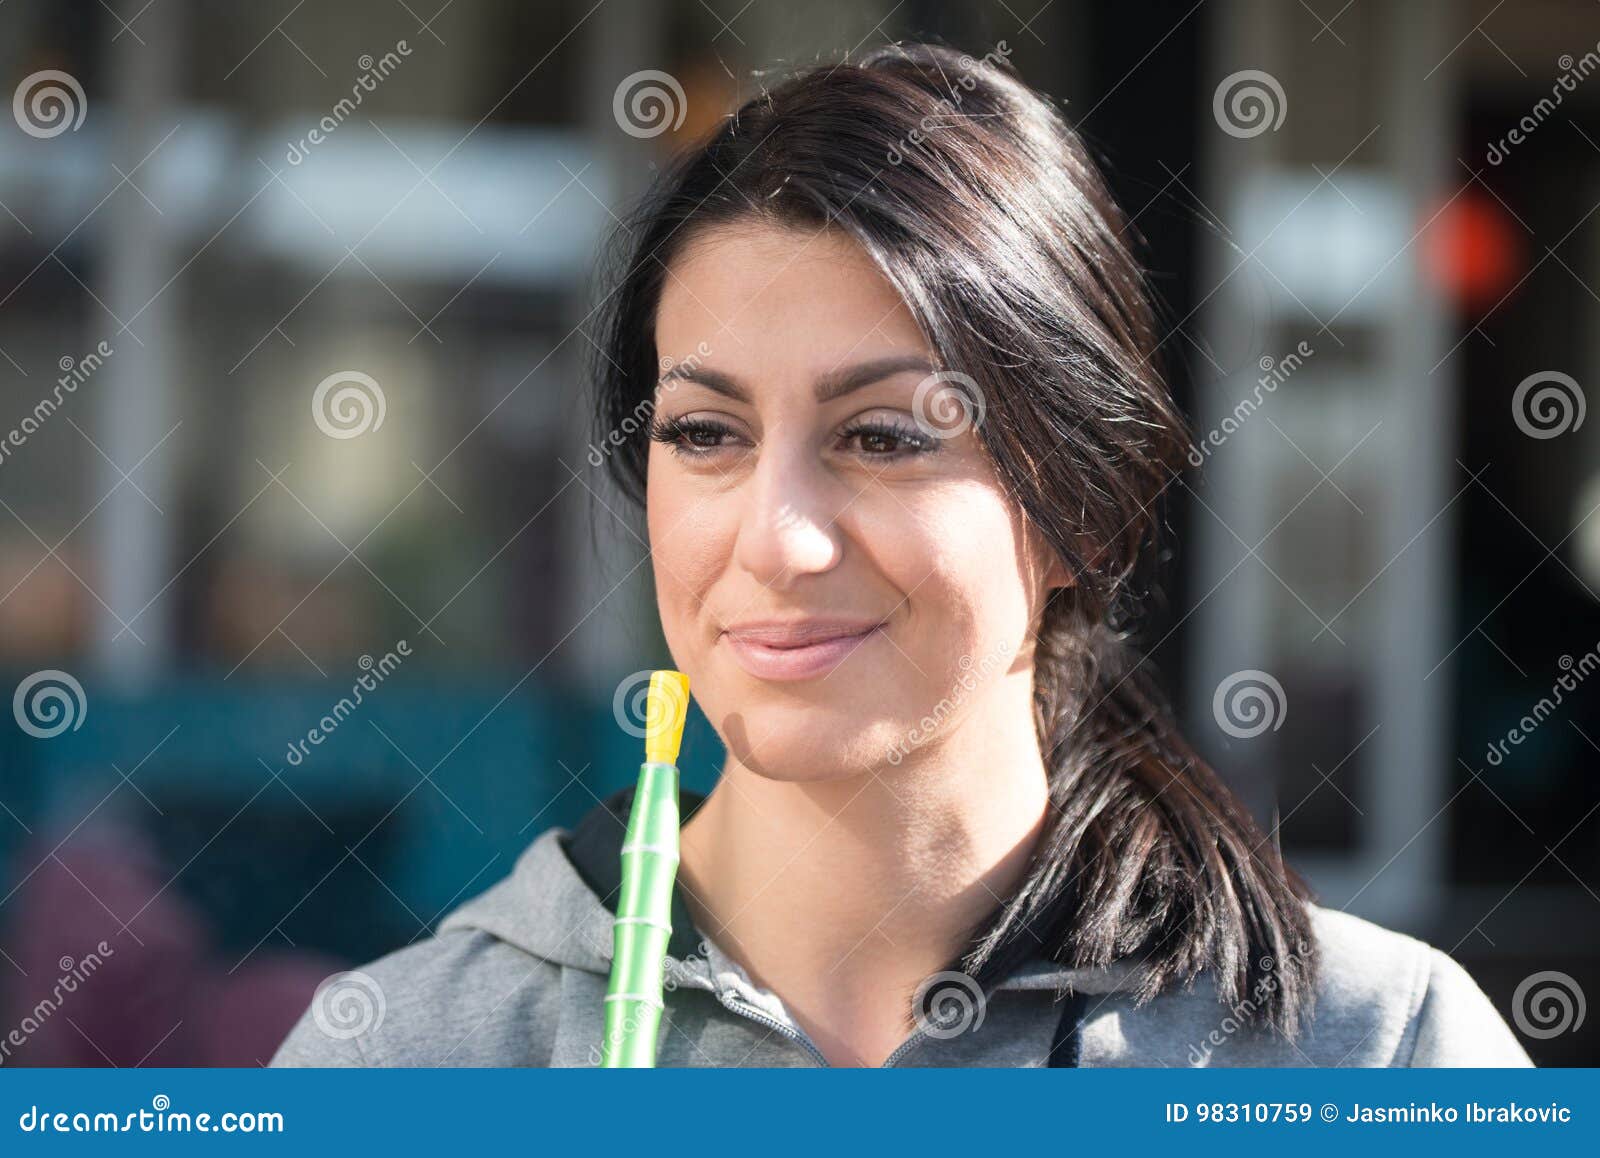 Woman Exhaling Smoke Inhaling From A Hookah Stock Image